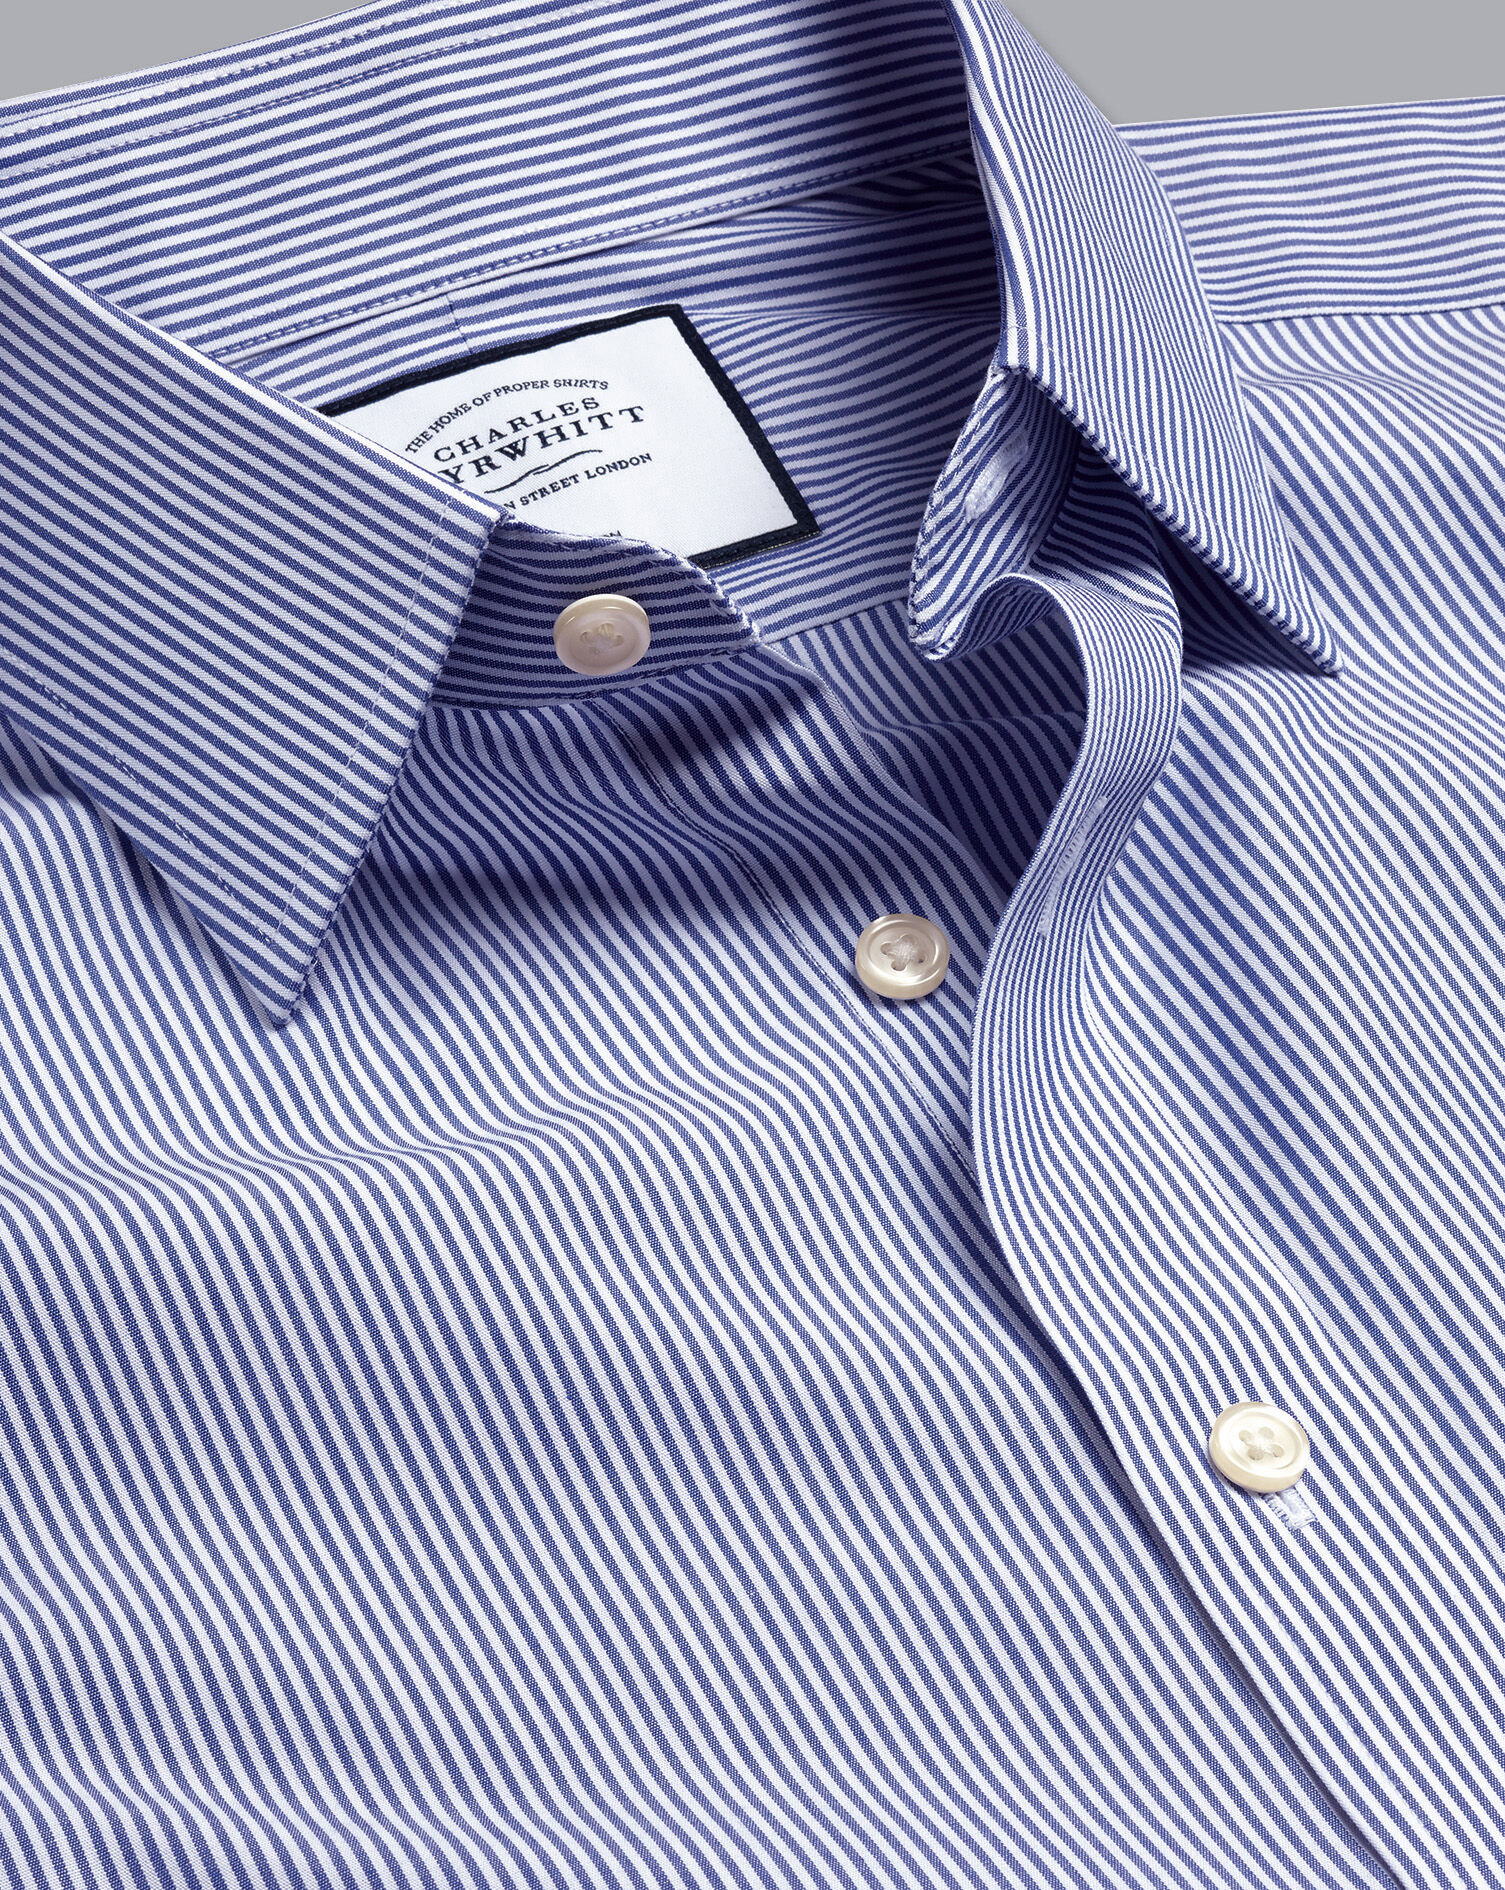 Fashion Shirts Stripe Shirts H&M L.O.G.G Stripe Shirt blue-white striped pattern casual look 